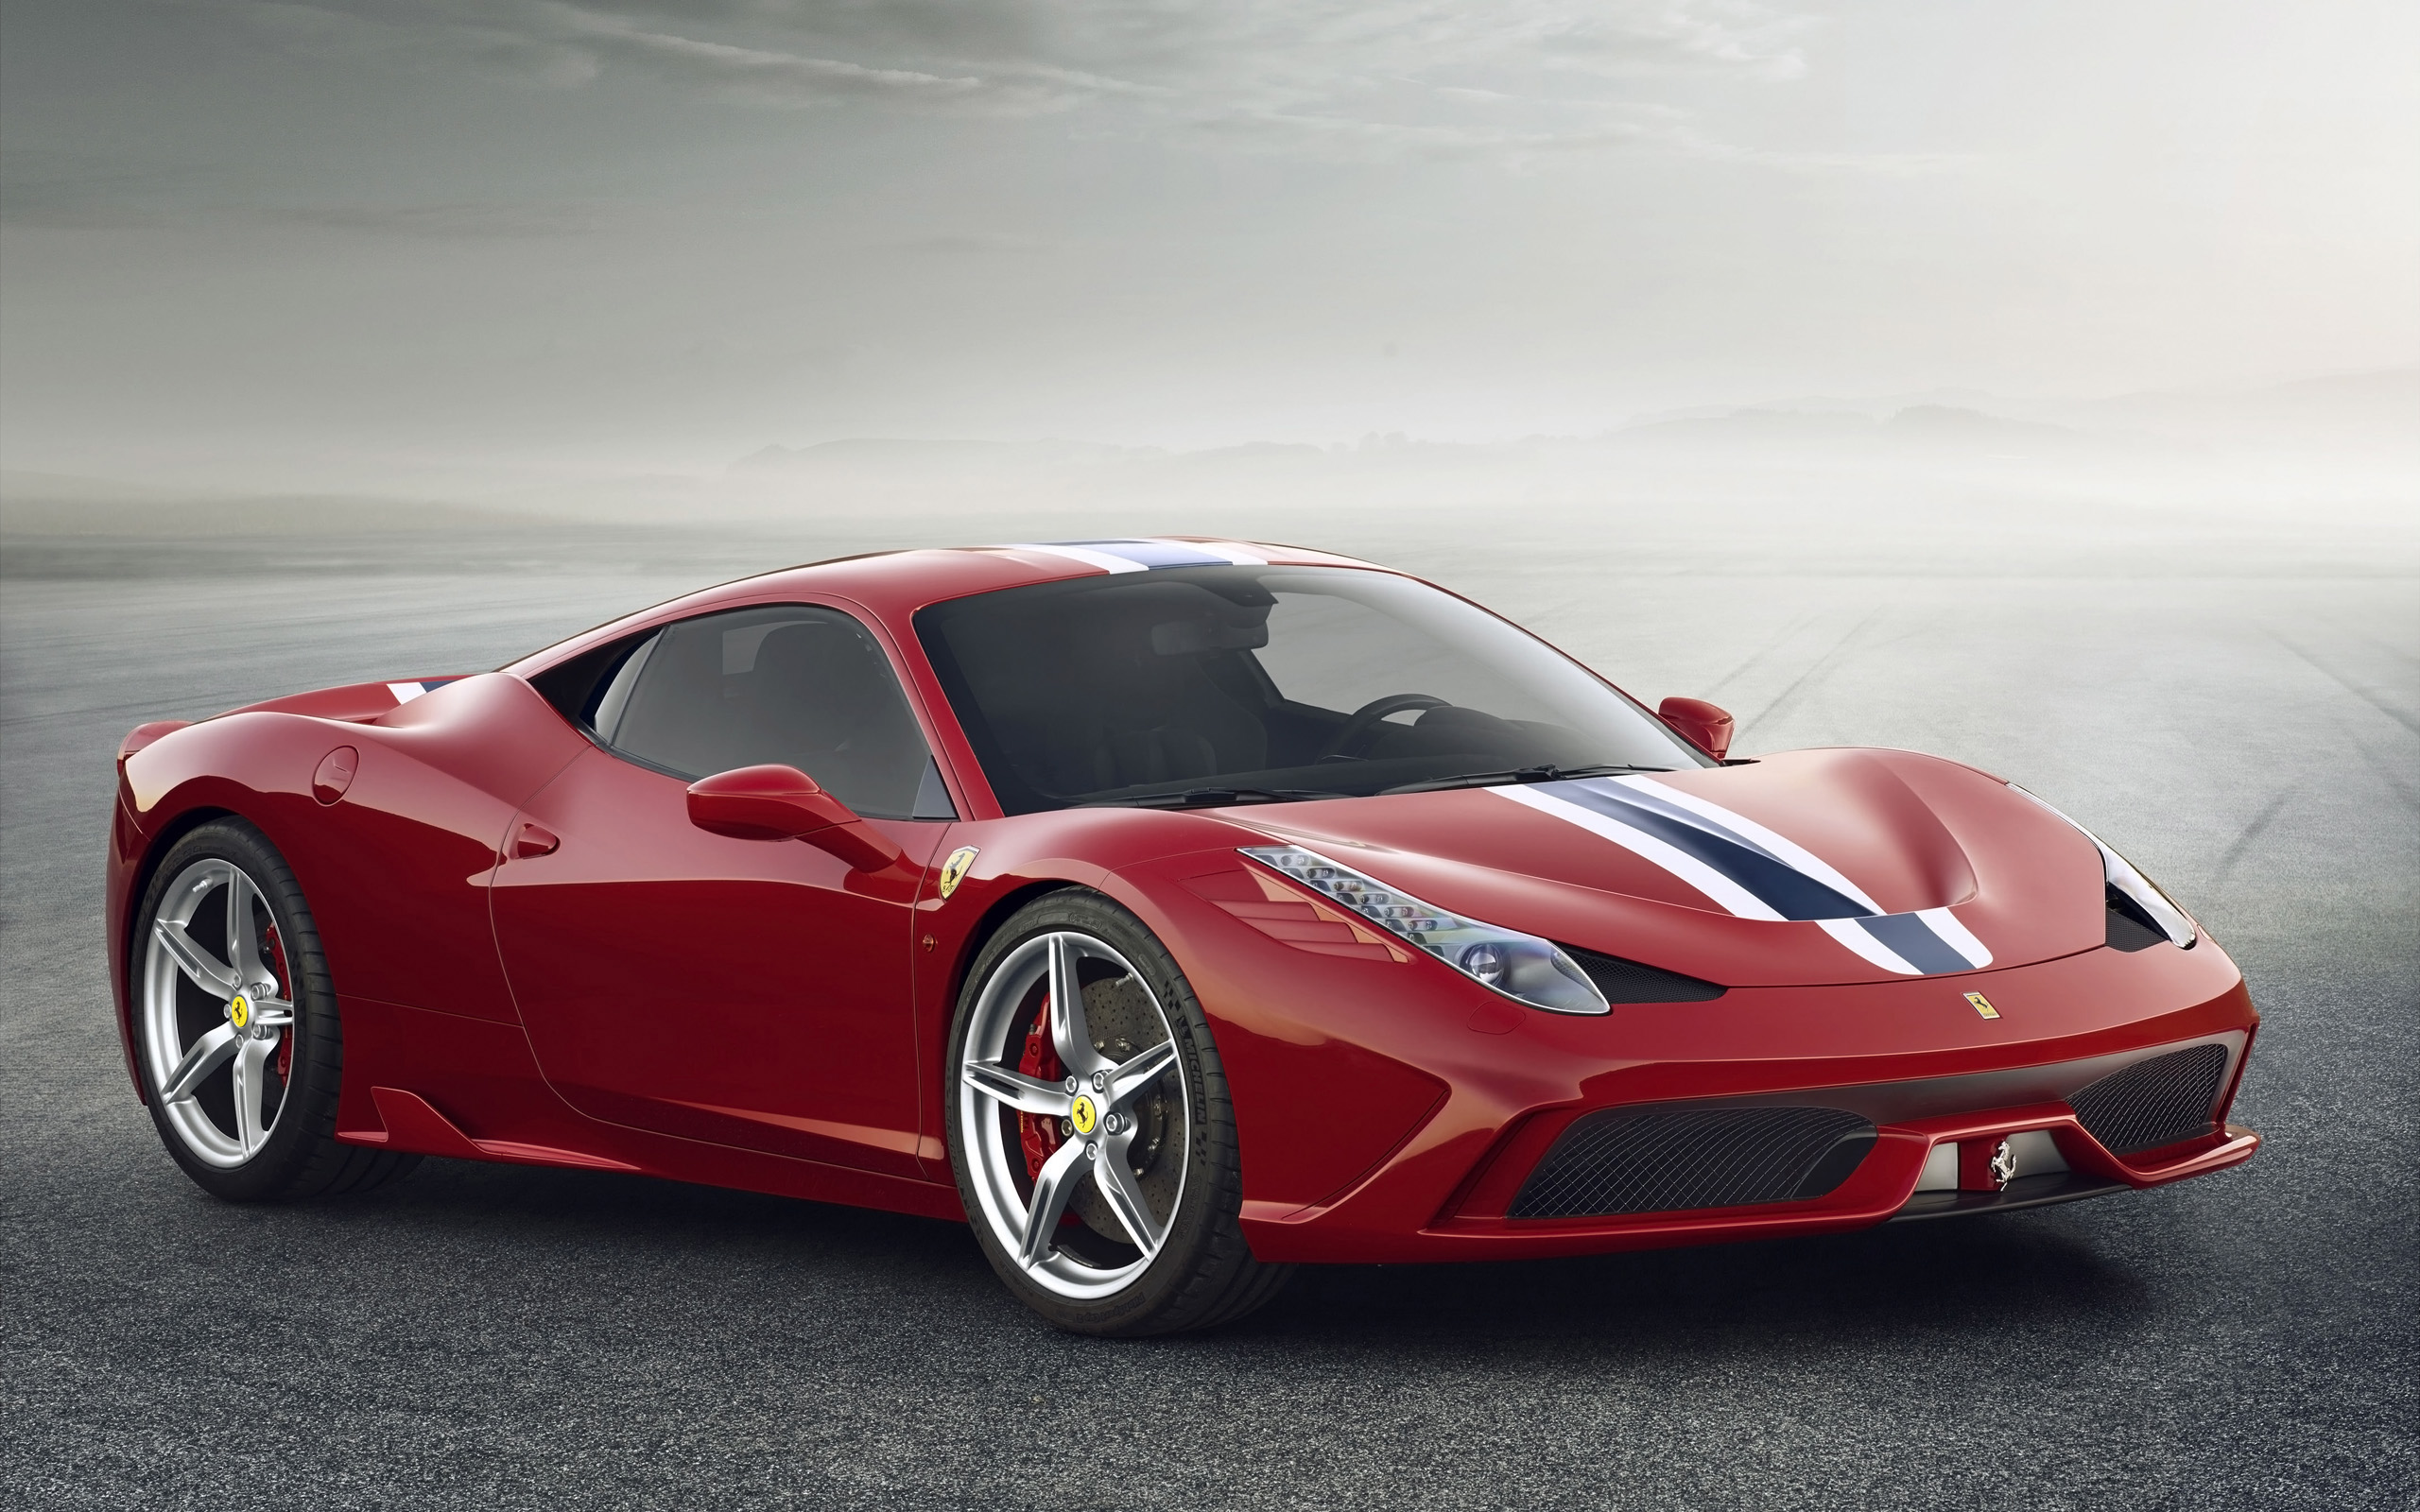 Vinilos para Ferrari: 18.000 euros